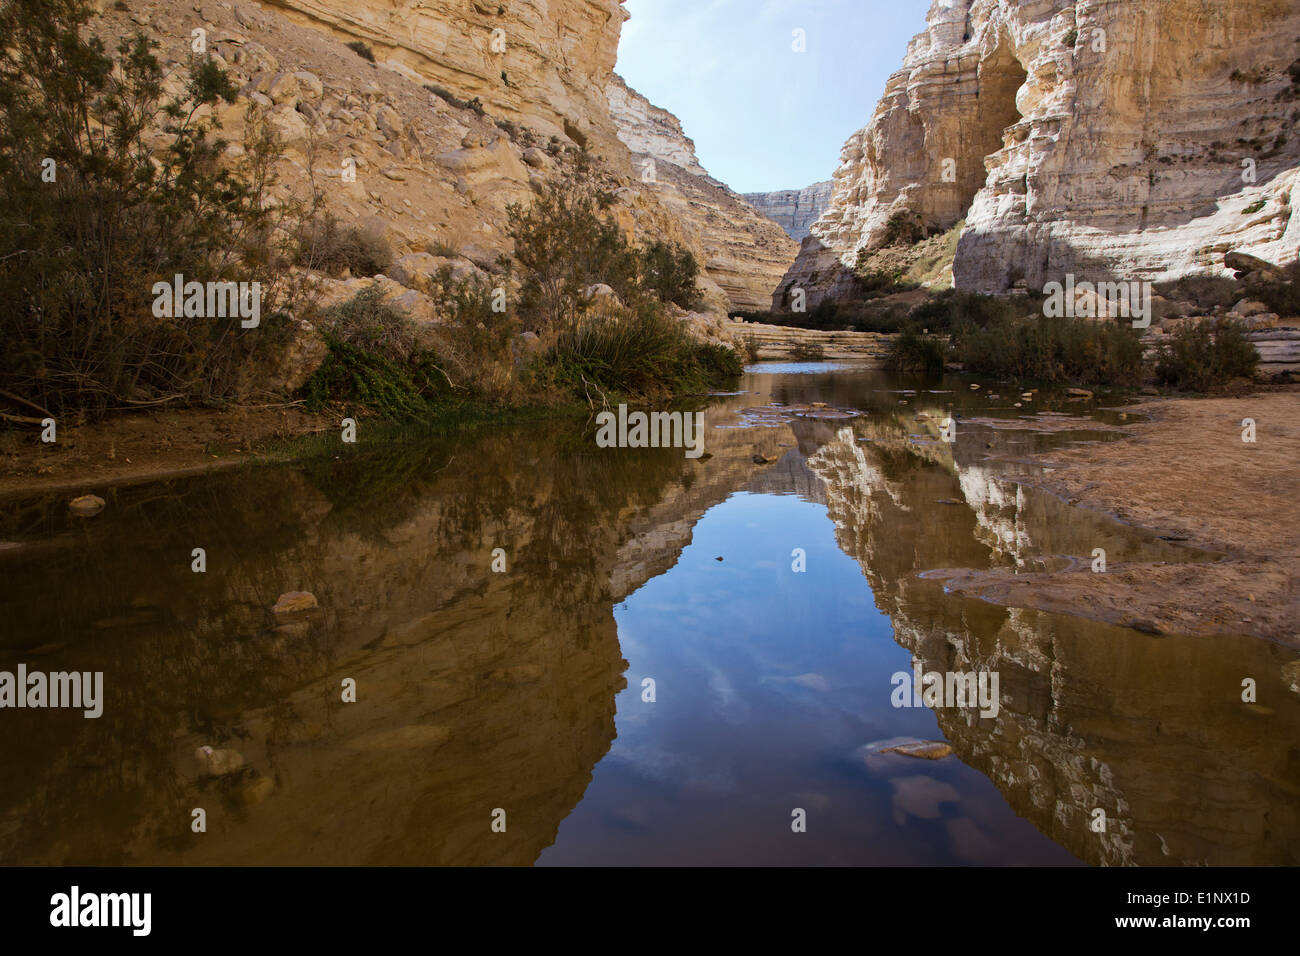 Ein Avdat, acqua dolce primavera nel deserto del Negev, Israele Foto Stock